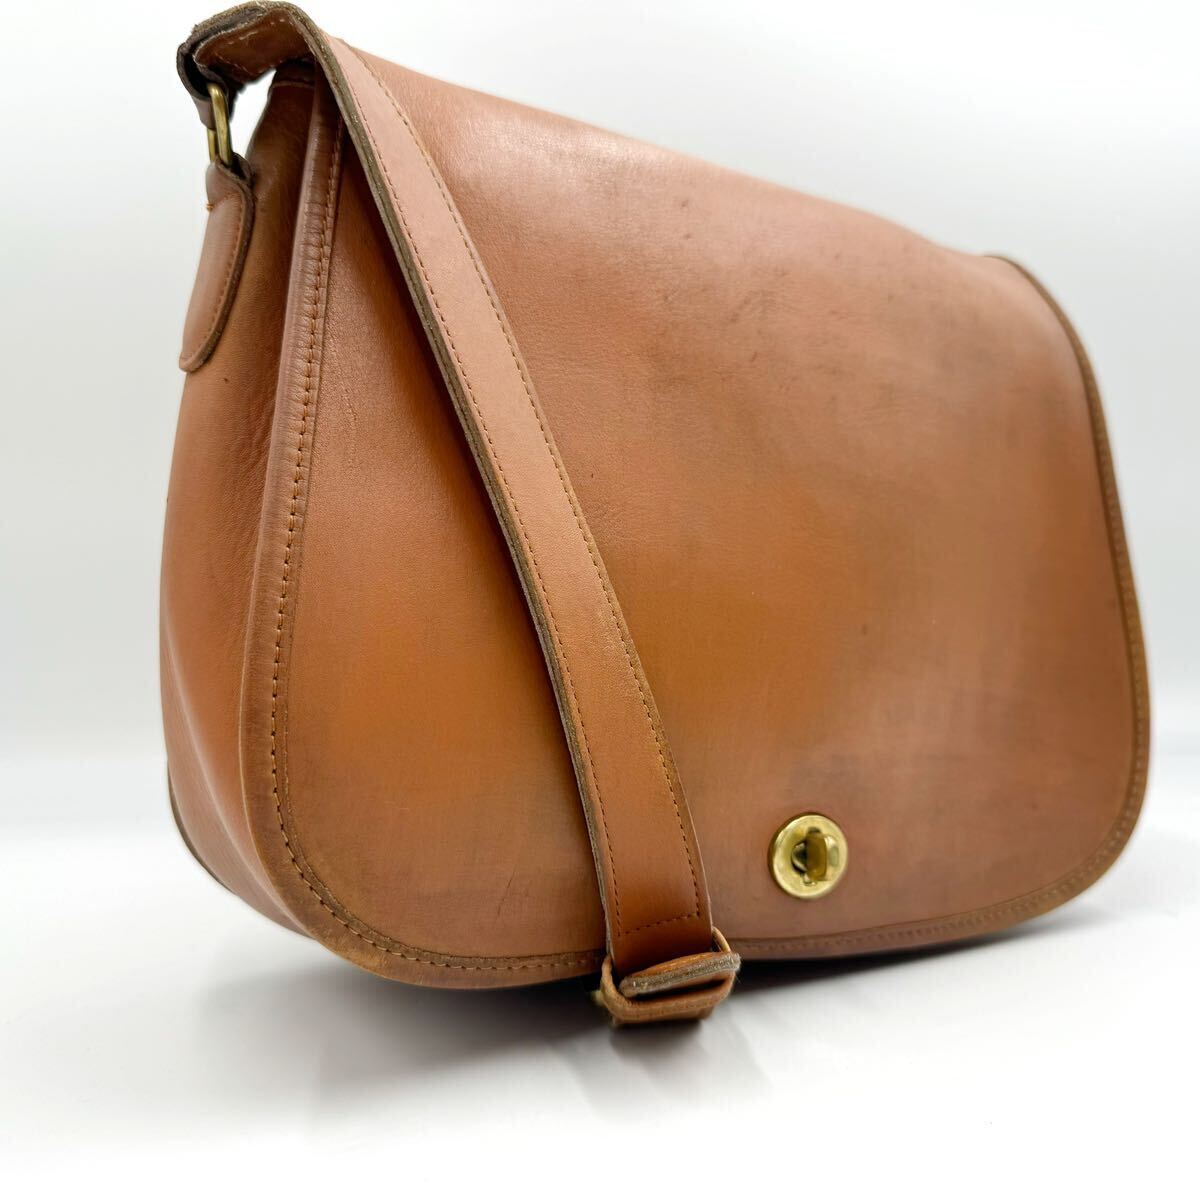 1 jpy OLD COACH Old Coach shoulder bag Turn lock glove tan leather Brown Vintage diagonal ..